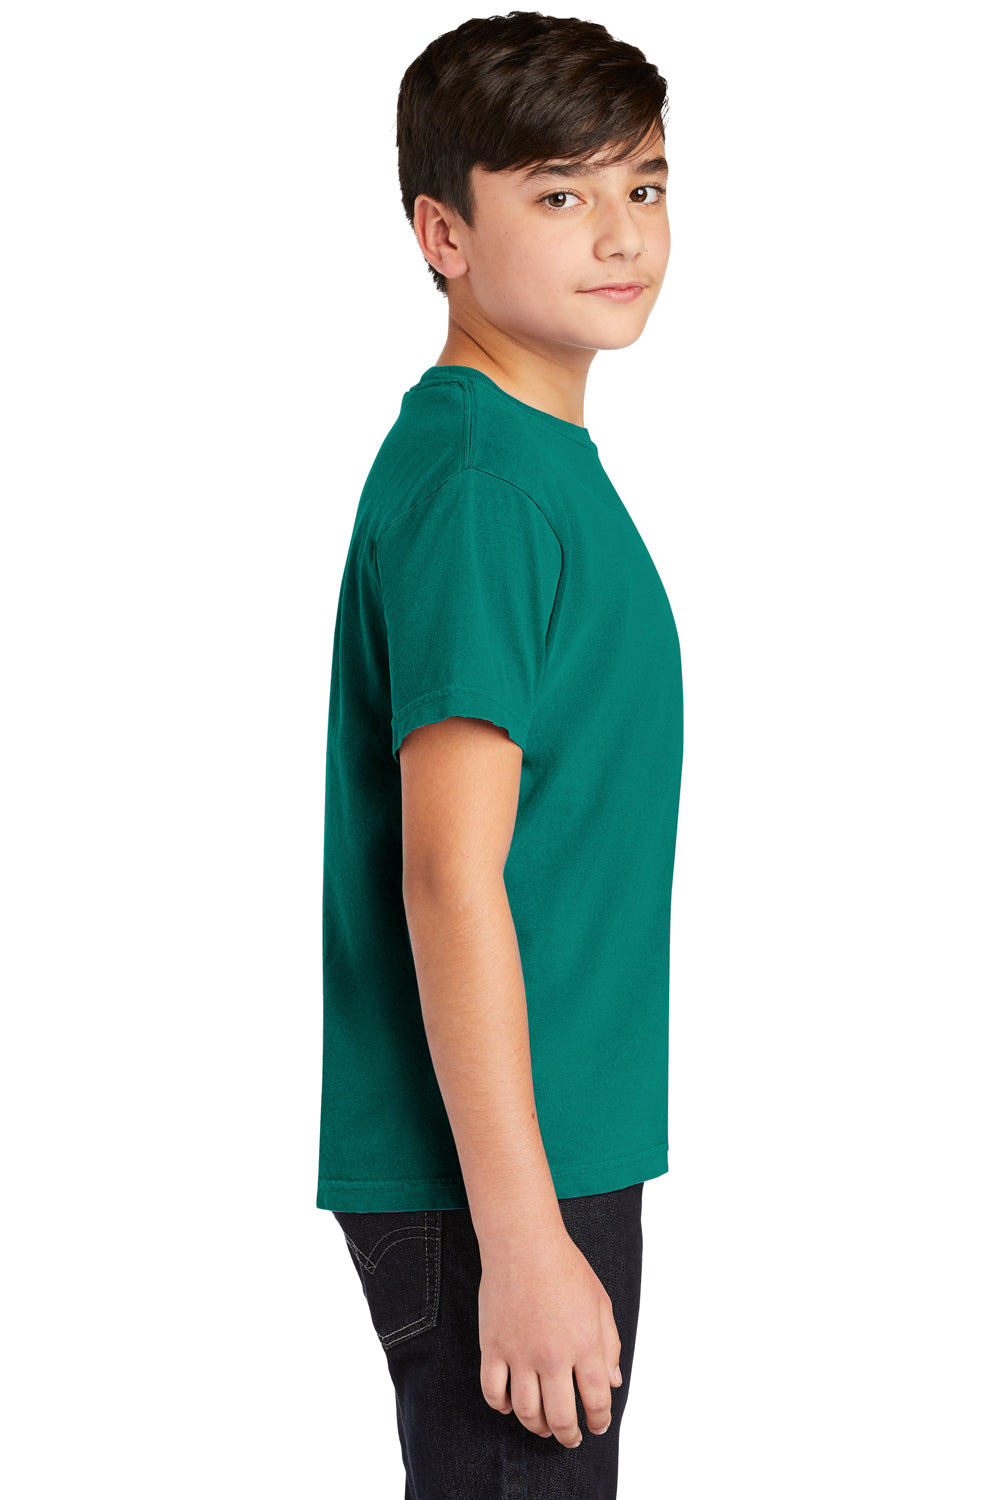 Comfort Colors C9018 Youth Short Sleeve Crewneck T-Shirt Seafoam Green Side